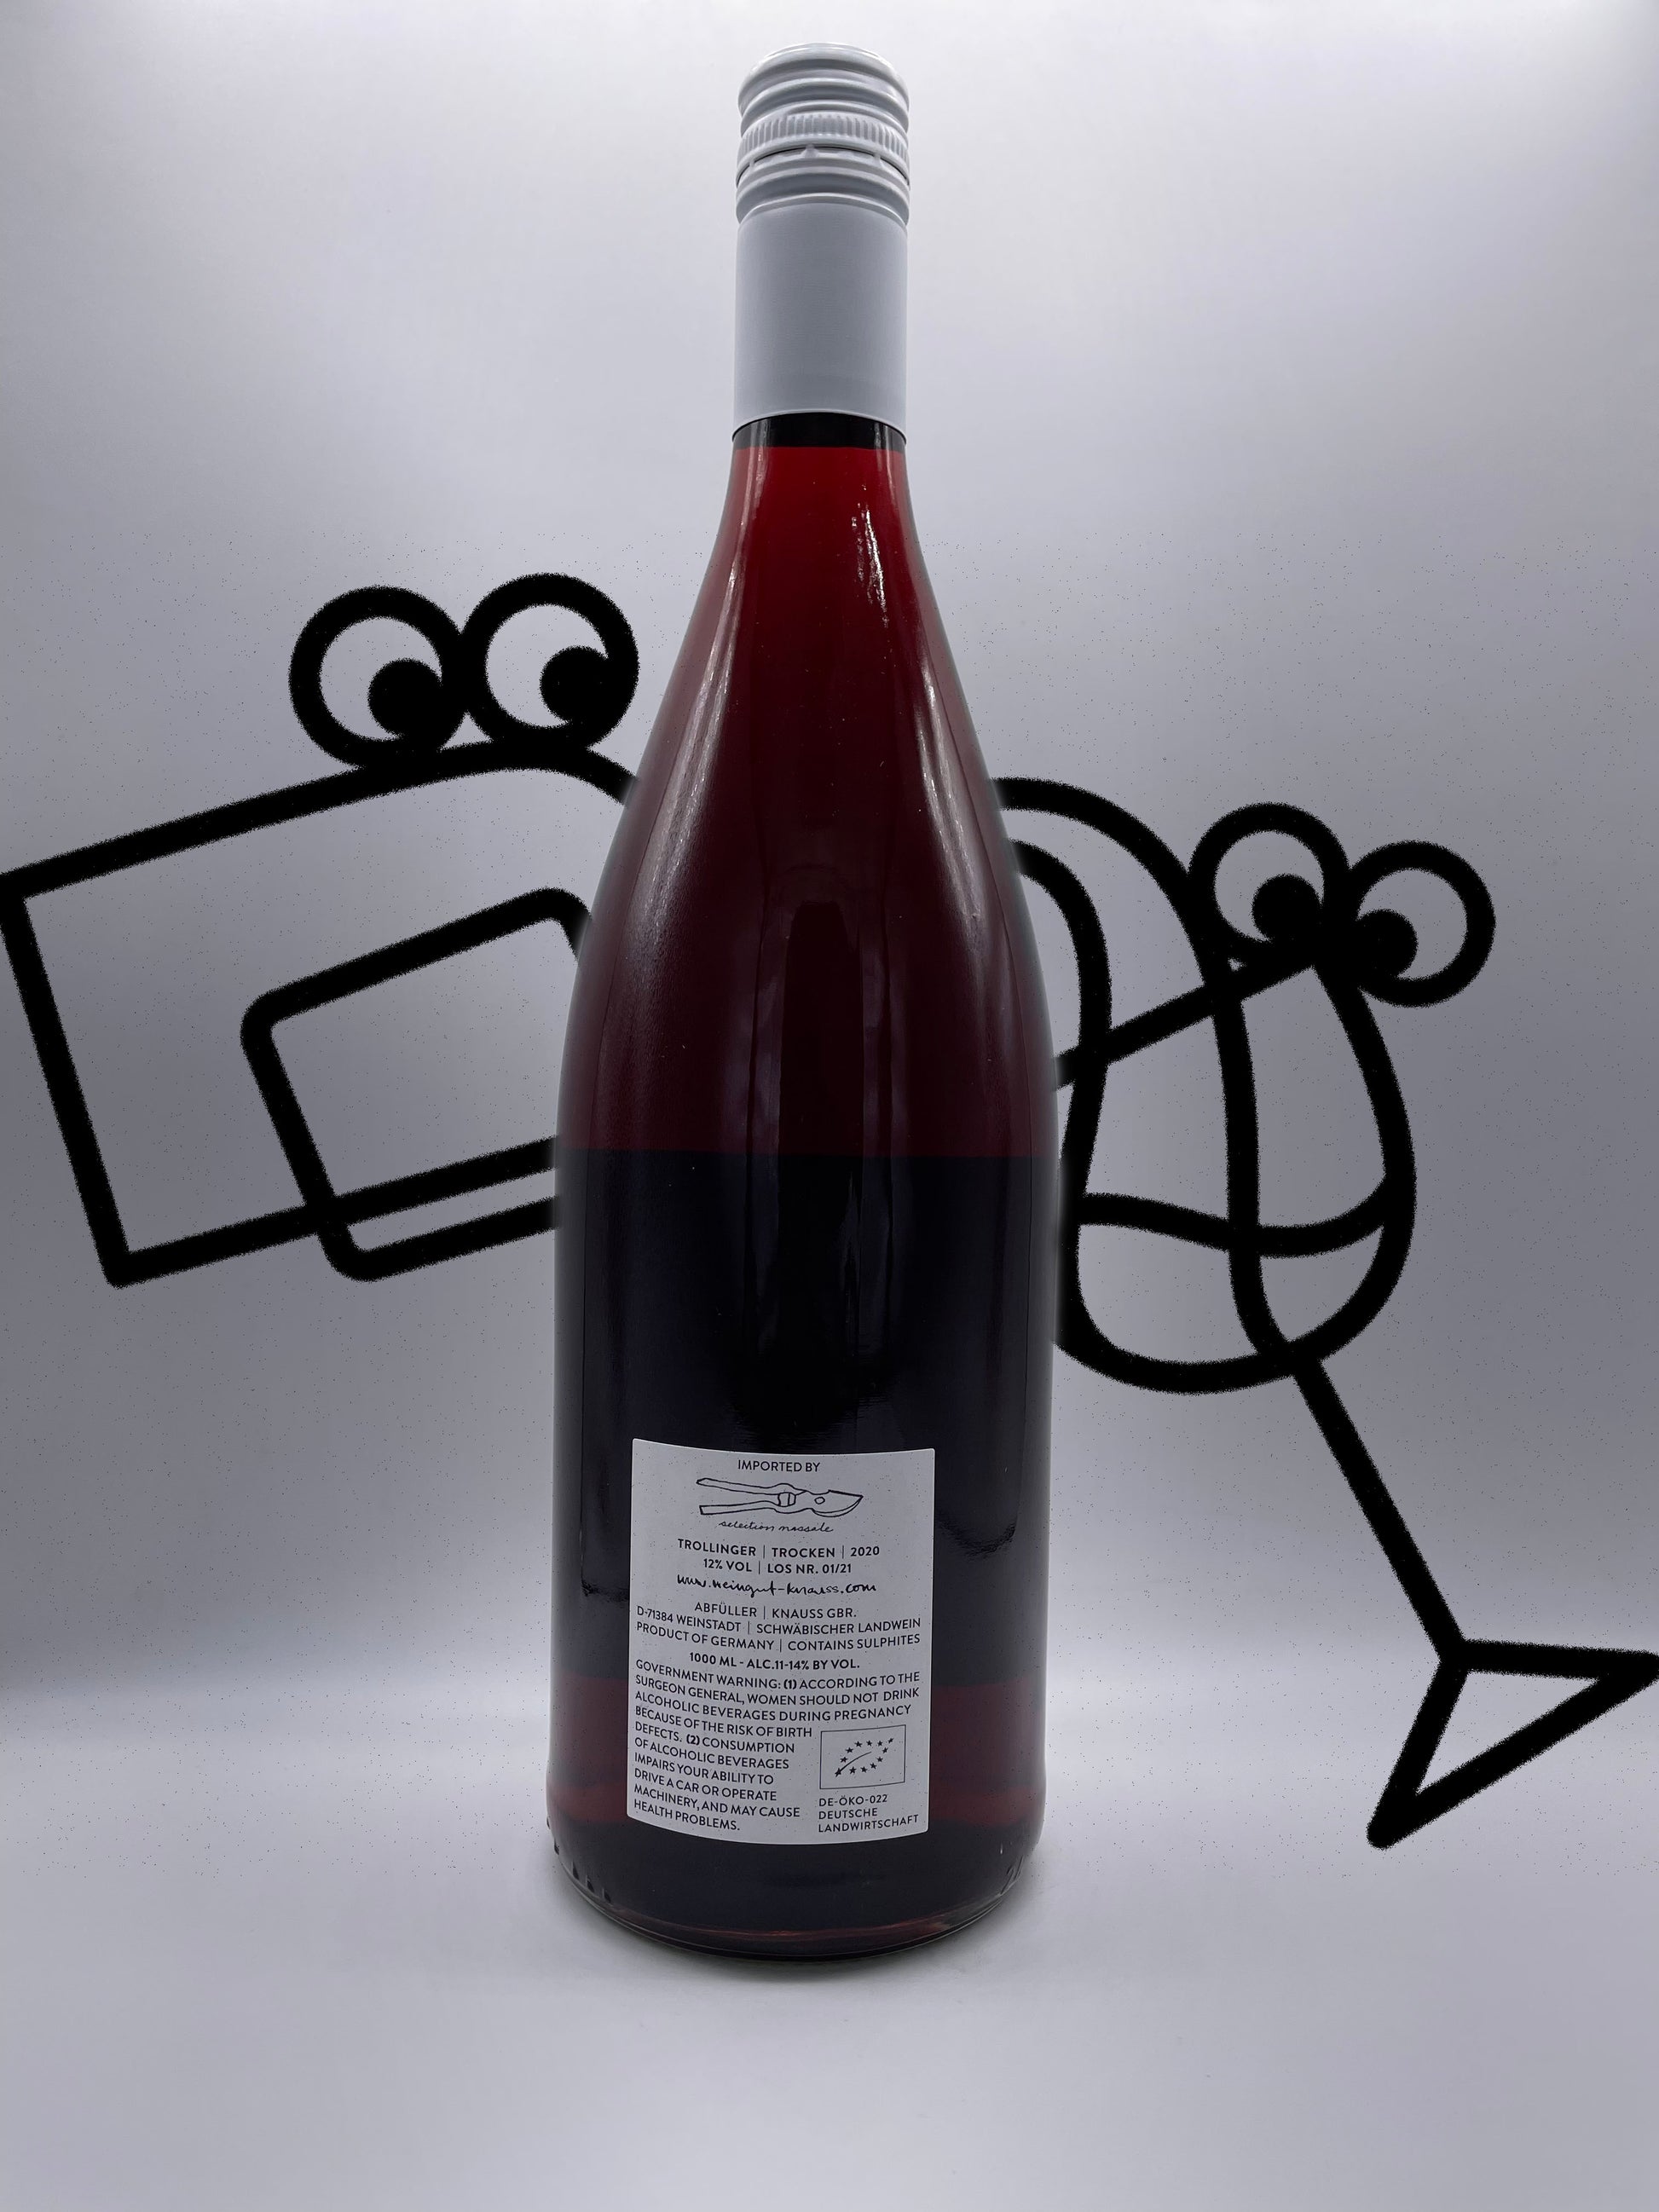 Andi Knauss 'La Boutanche' Trollinger Strümpfelbach, Germany 2020 1L - Williston Park Wines & Spirits